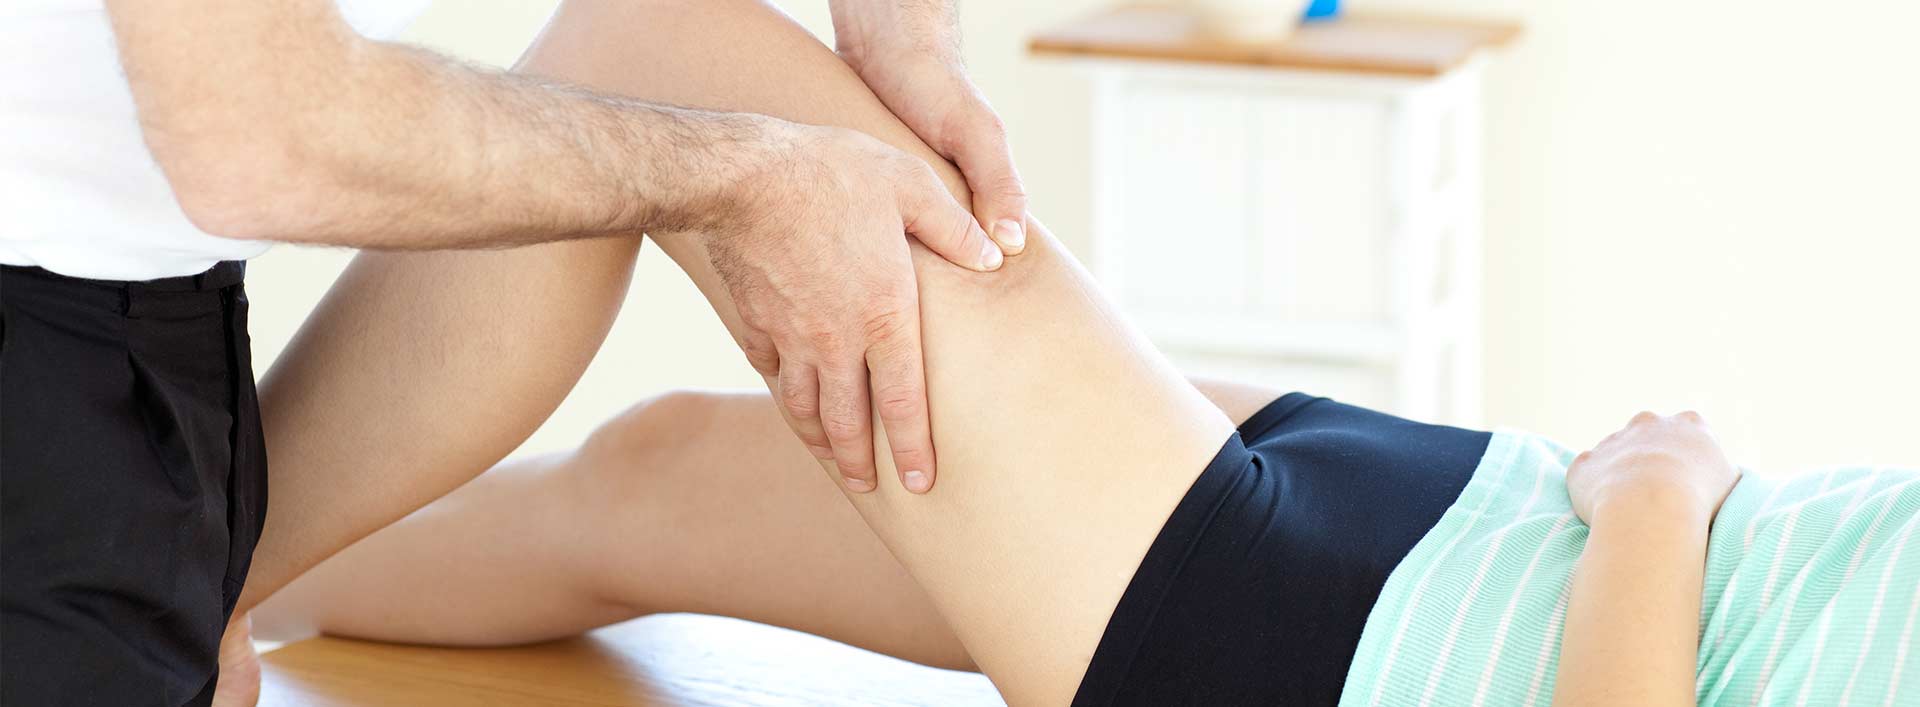  Massage Therapy | Northern Hills Chiropractic | North Calgary Chiropractor